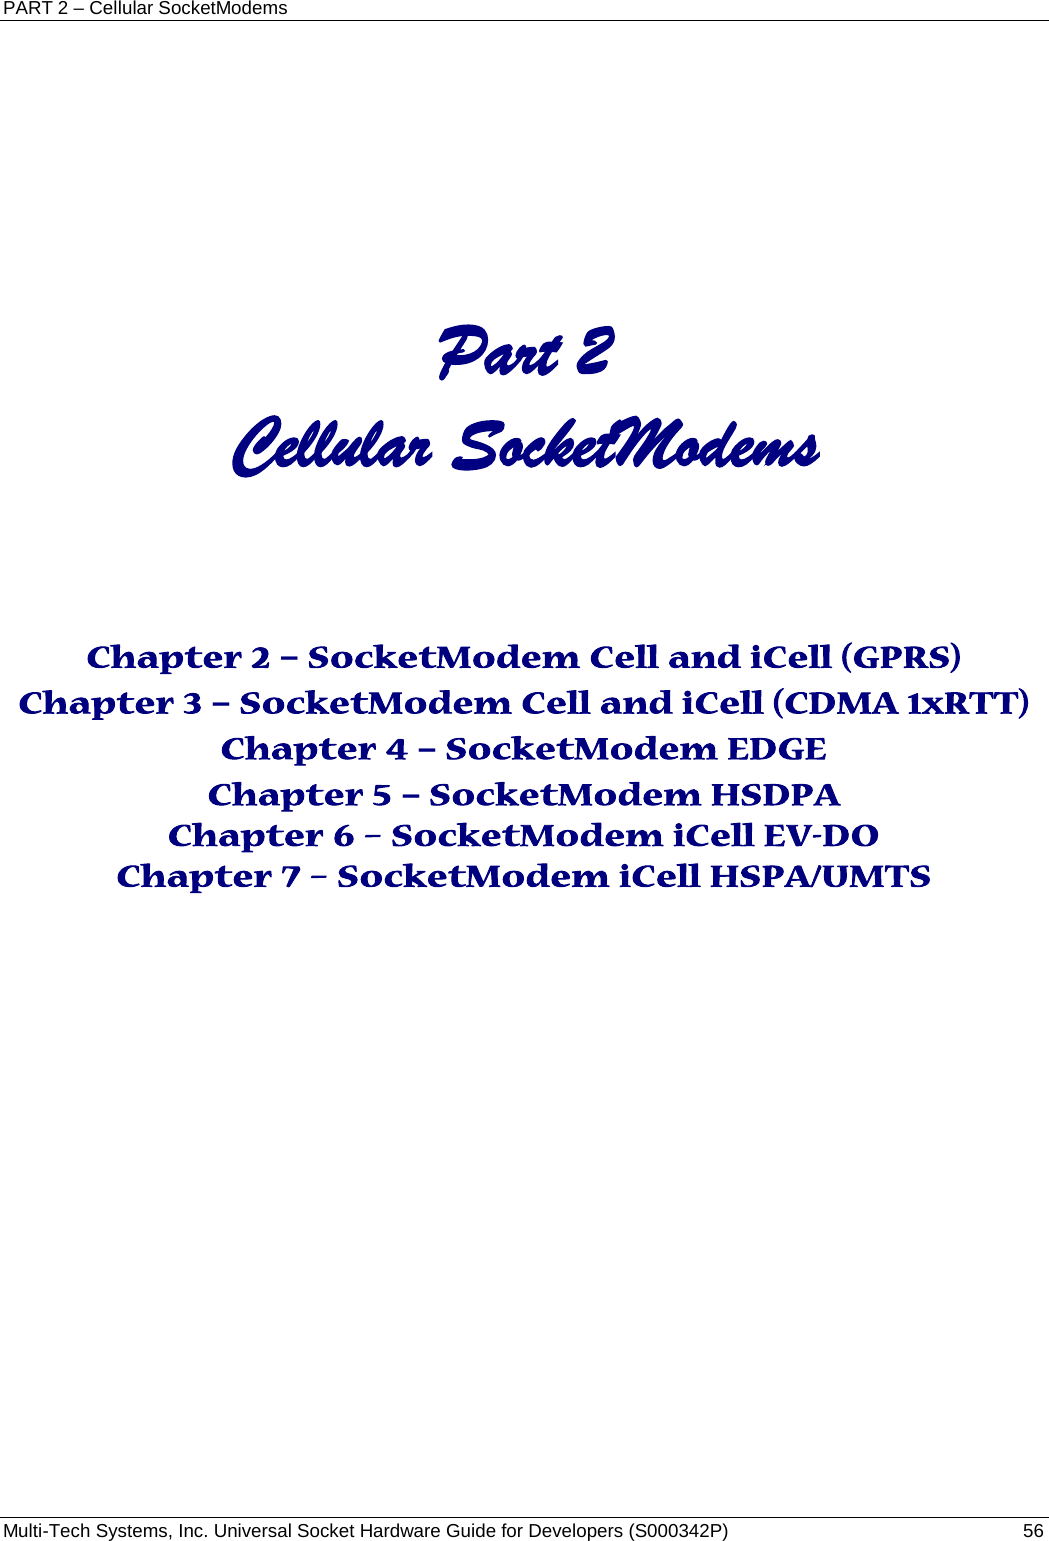 PART 2 – Cellular SocketModems Multi-Tech Systems, Inc. Universal Socket Hardware Guide for Developers (S000342P)  56     Part 2  Cellular SocketModems      Chapter 2 – SocketModem Cell and iCell (GPRS) Chapter 3 – SocketModem Cell and iCell (CDMA 1xRTT) Chapter 4 – SocketModem EDGE Chapter 5 – SocketModem HSDPA Chapter 6 – SocketModem iCell EV-DO Chapter 7 – SocketModem iCell HSPA/UMTS     